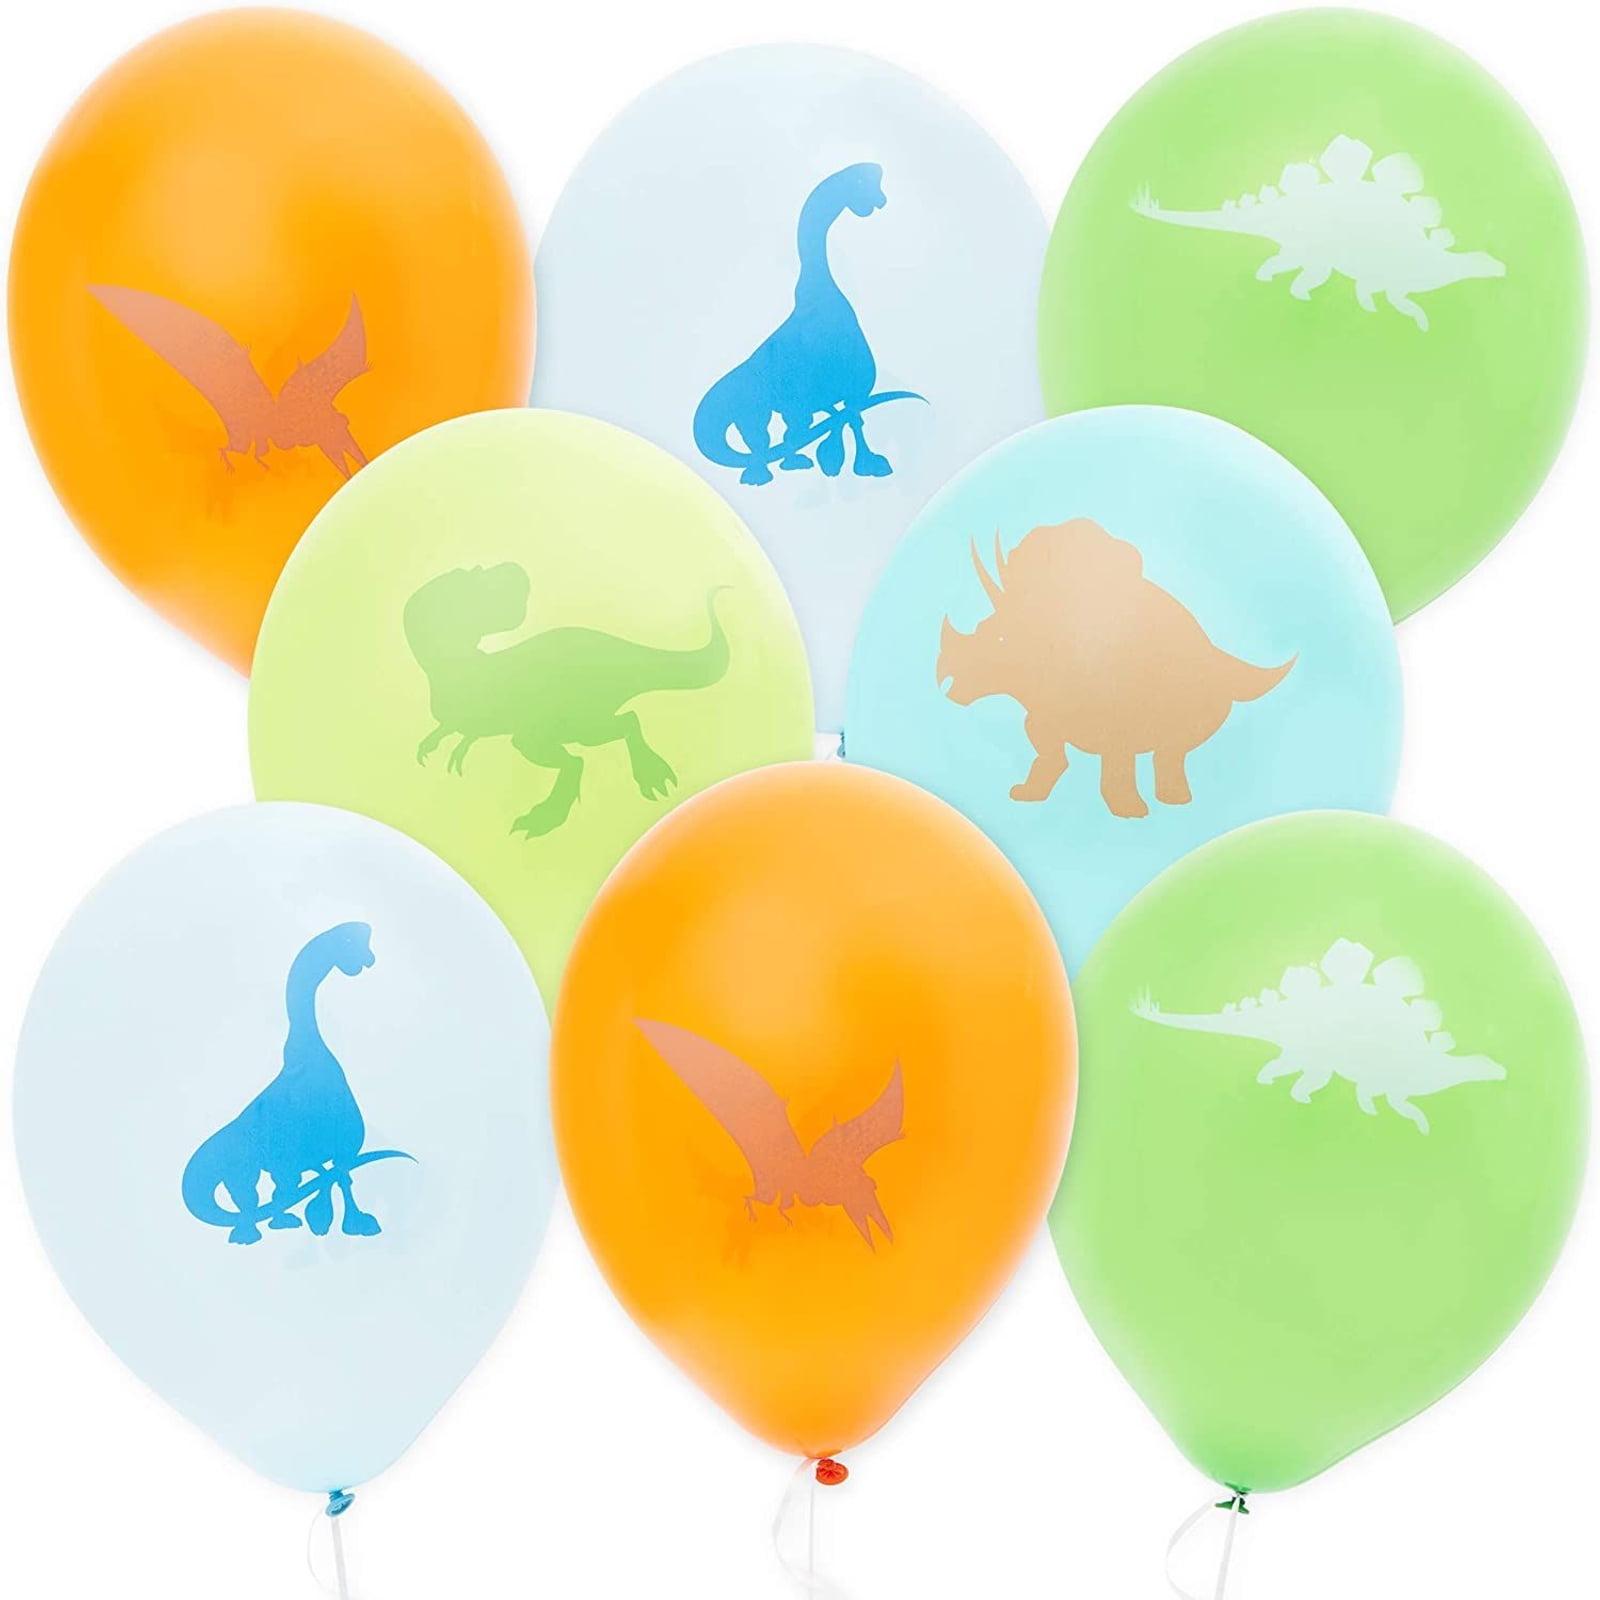 Kid Child T-Rex Dino Celebrate Party Stylish Unique Birthday Saurus Gift Bag Dinosaur Themed Design 